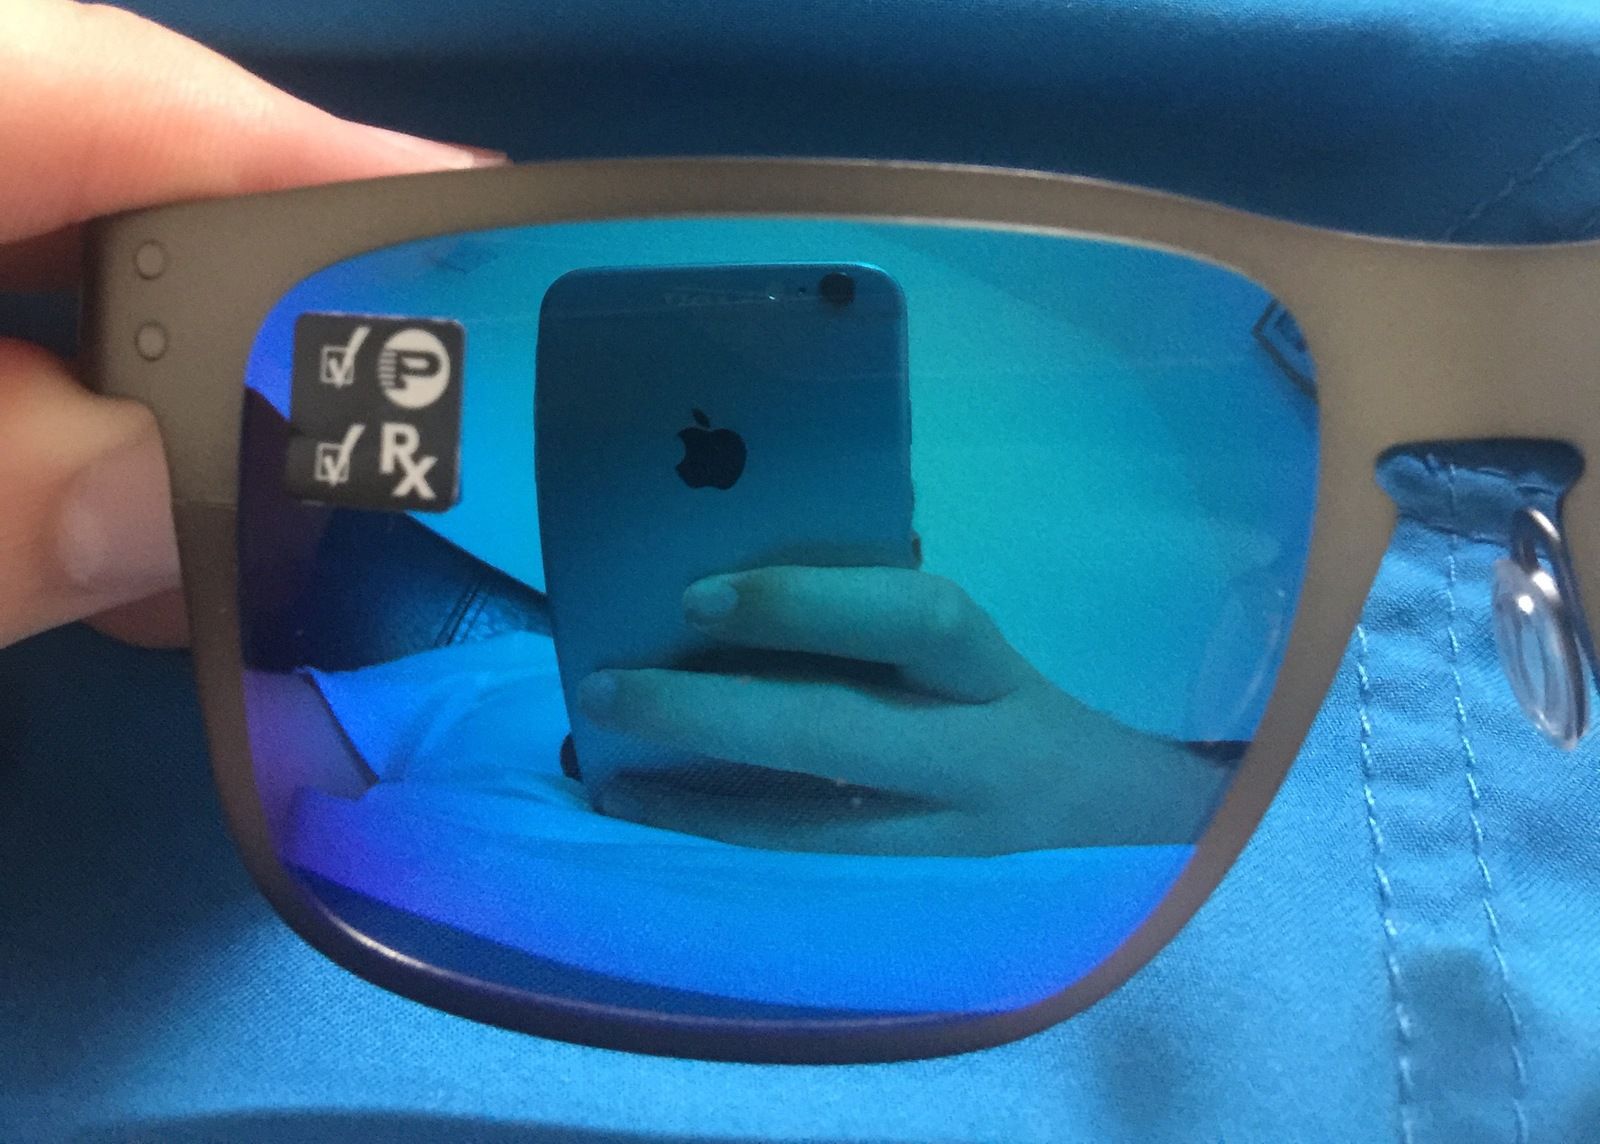 p sticker on oakley sunglasses